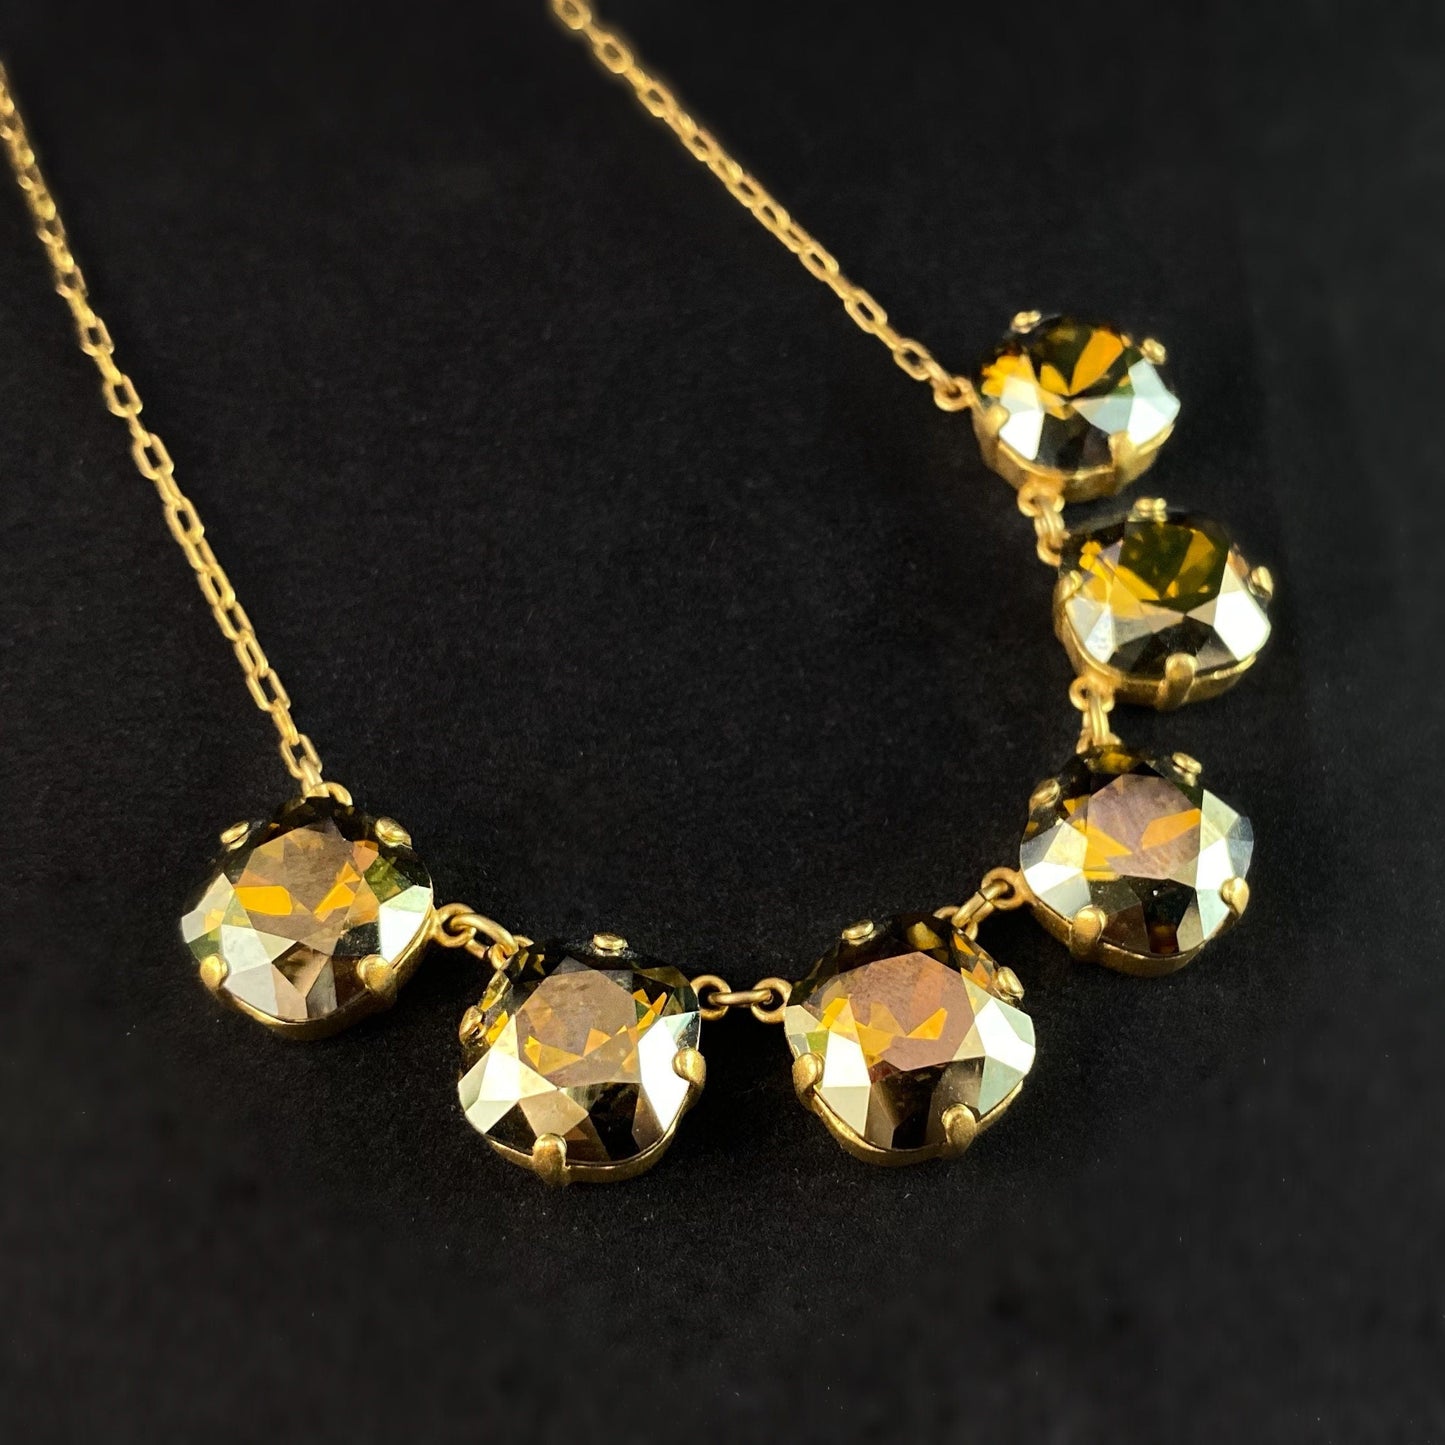 Cushion Cut Swarovski Crystal Pendant Necklace, Champagne - La Vie Parisienne by Catherine Popesco